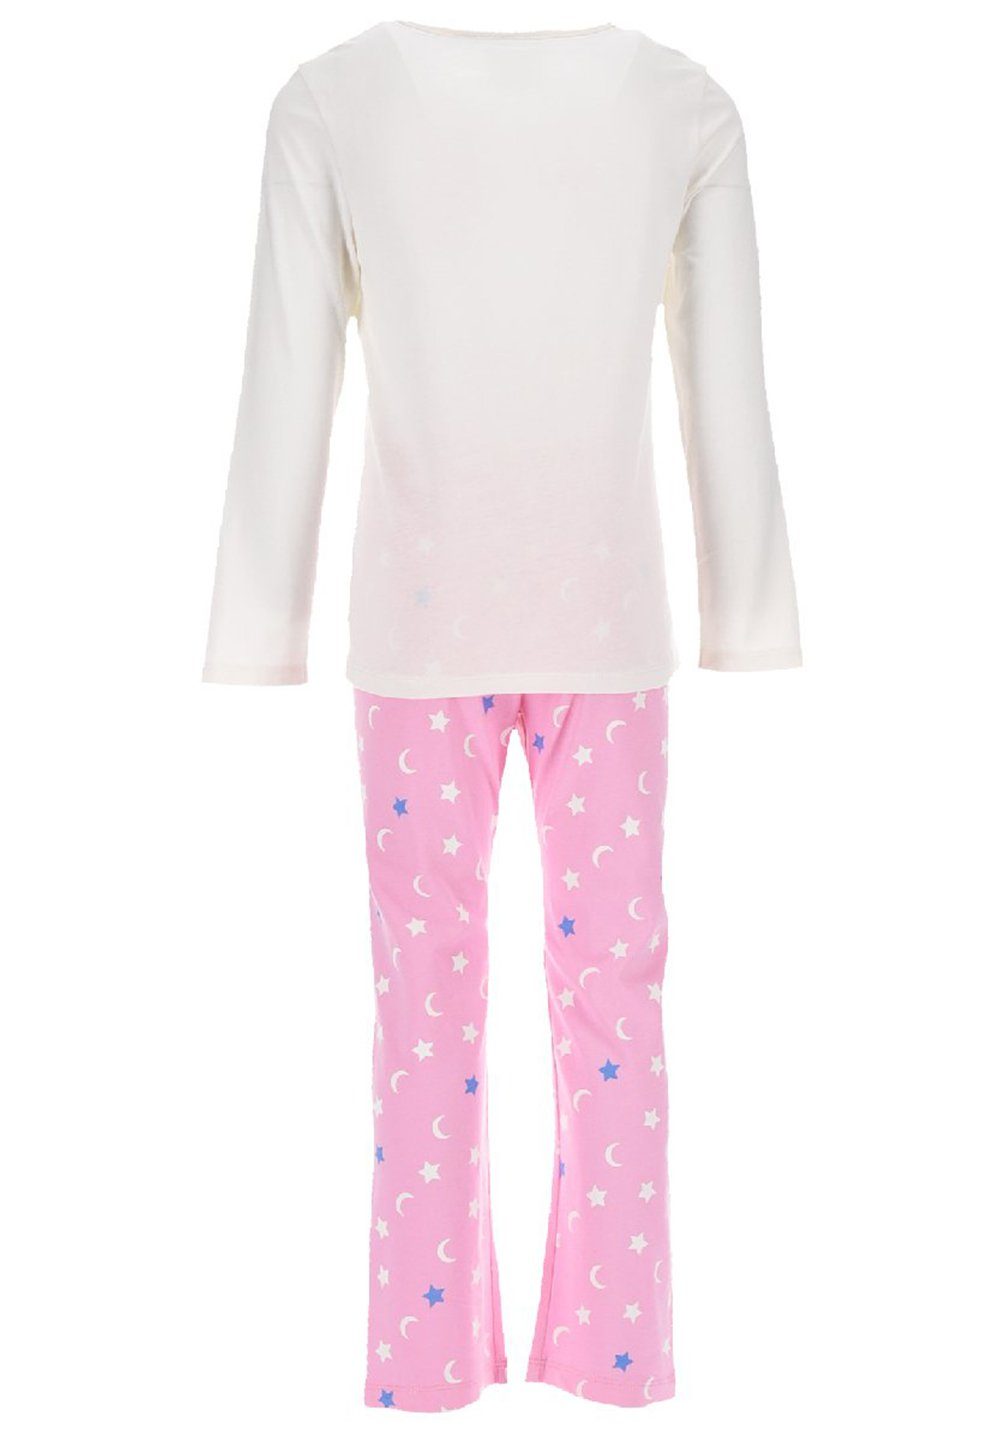 Kinder L.O.L. Weiß Mädchen Shirt Schlafanzug Langarm + Schlafanzug Schlaf-Hose Kinder SURPRISE! Pyjama